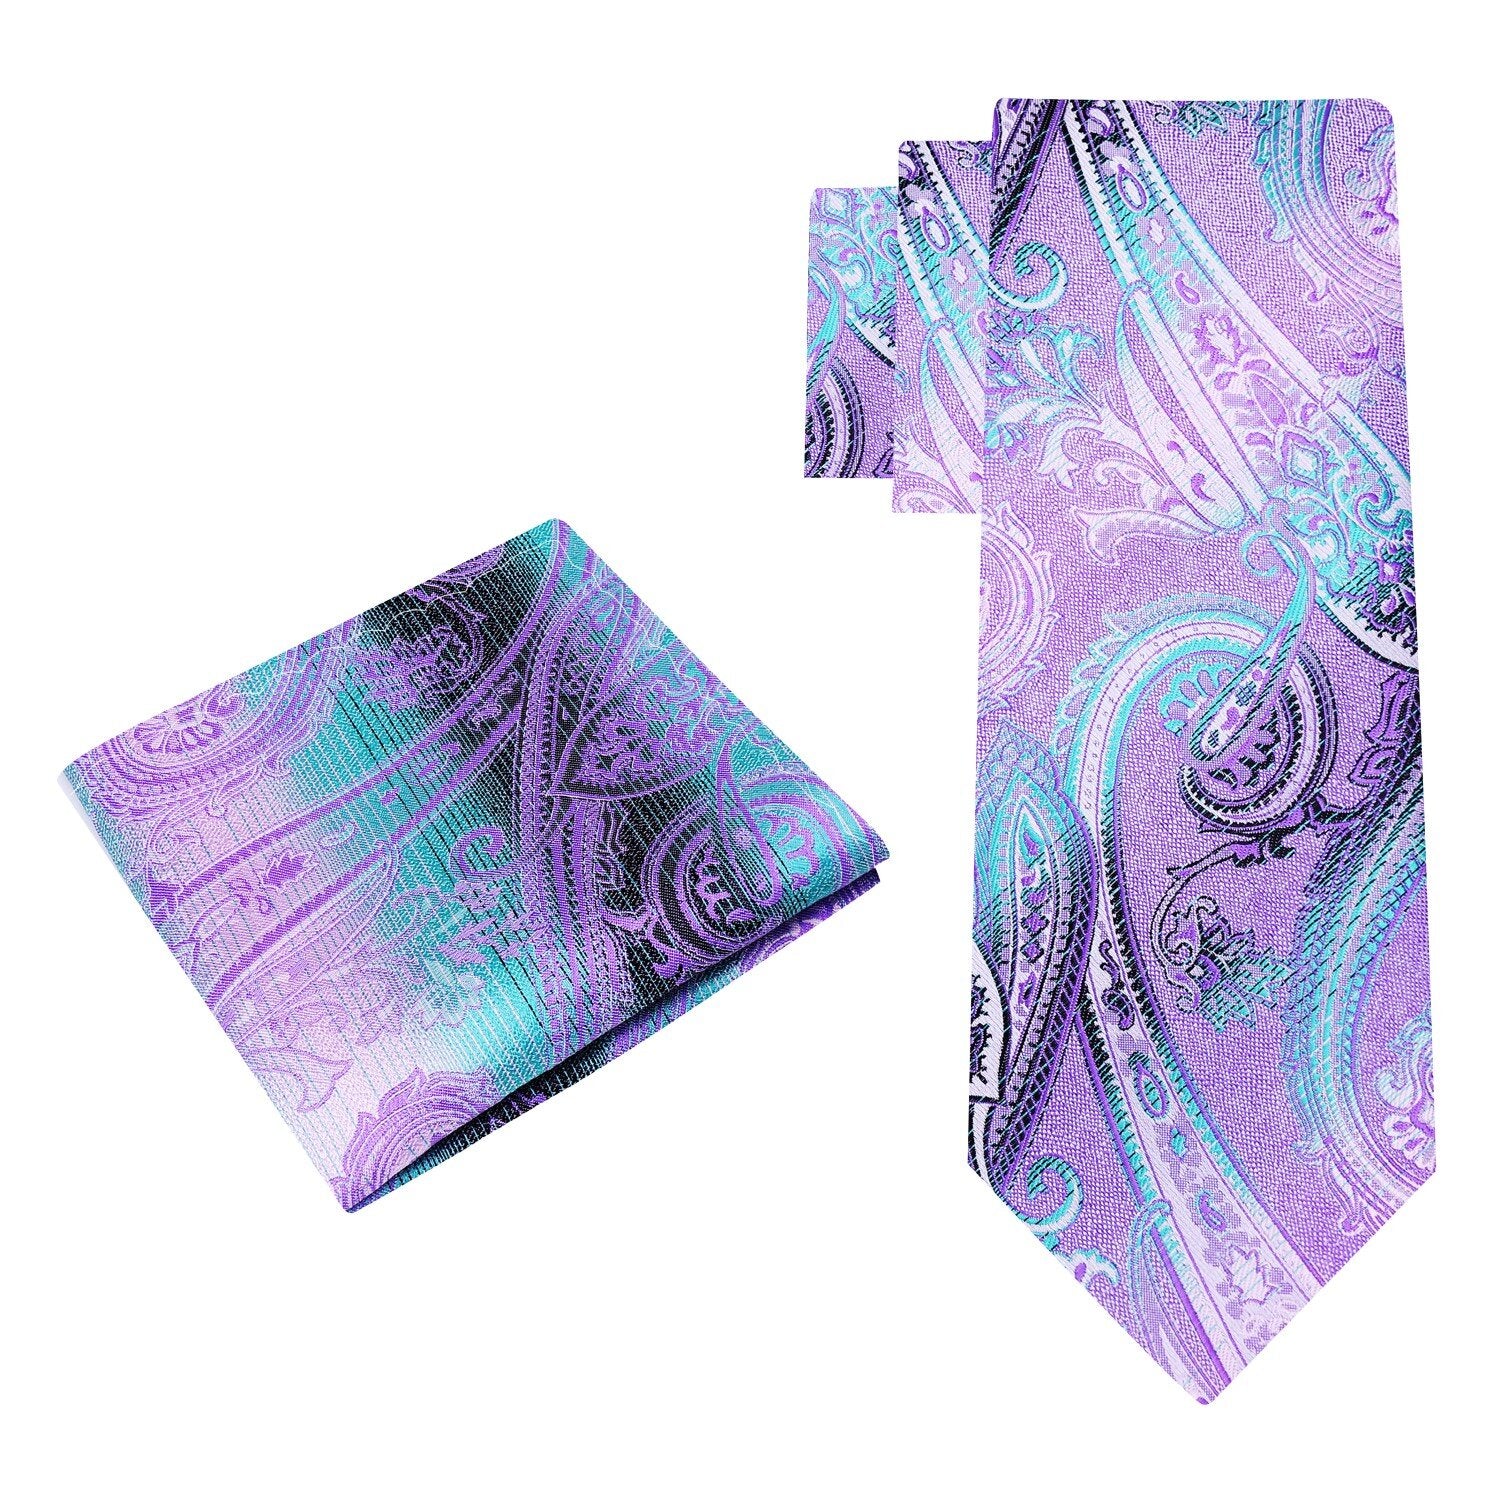 Alt View: A Purple, Light Teal Paisley Pattern Silk Necktie, Matching Pocket Square